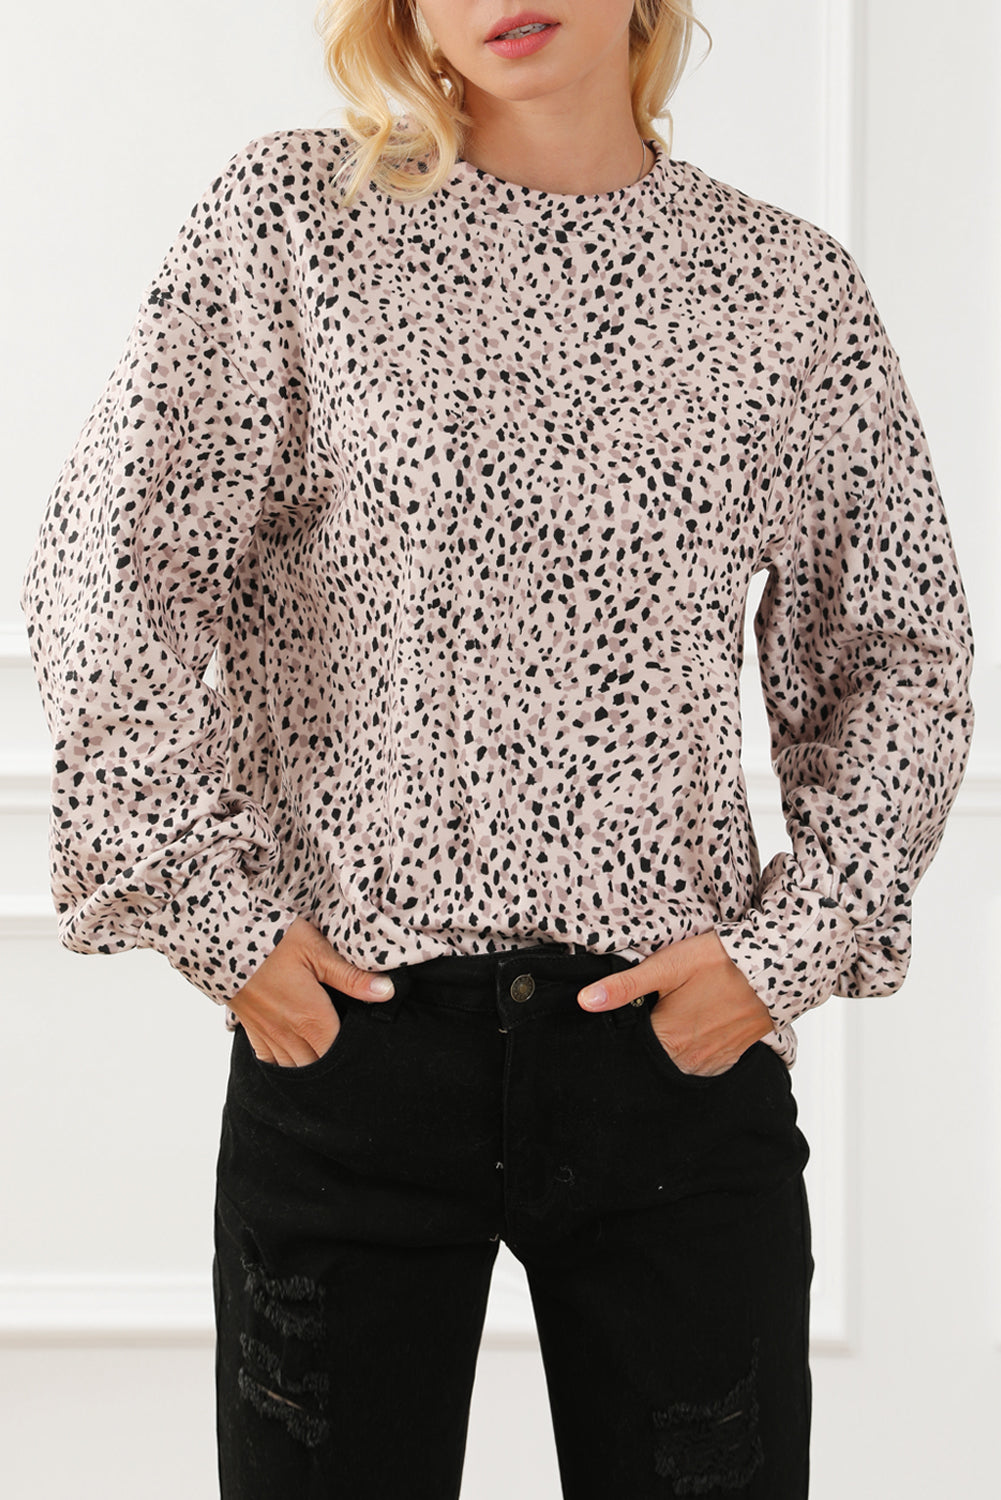 Leopard Boyfriend Crew Neck Leopard Sweatshirt